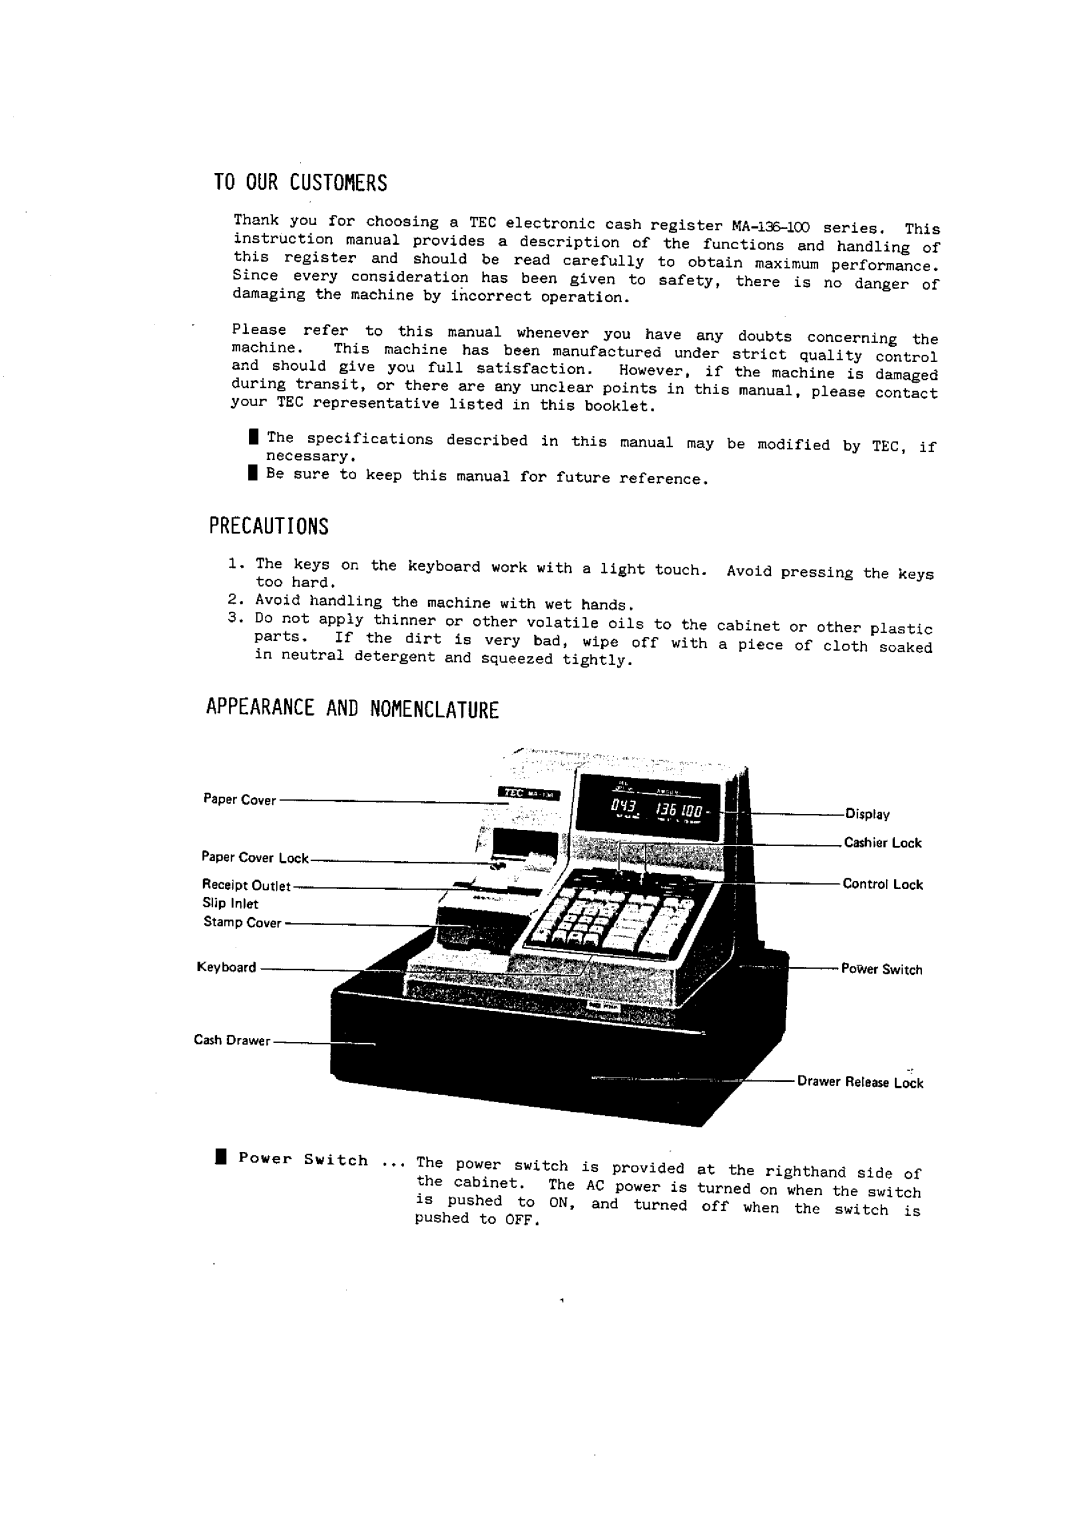 Toshiba MA-136-100 SERIES manual 